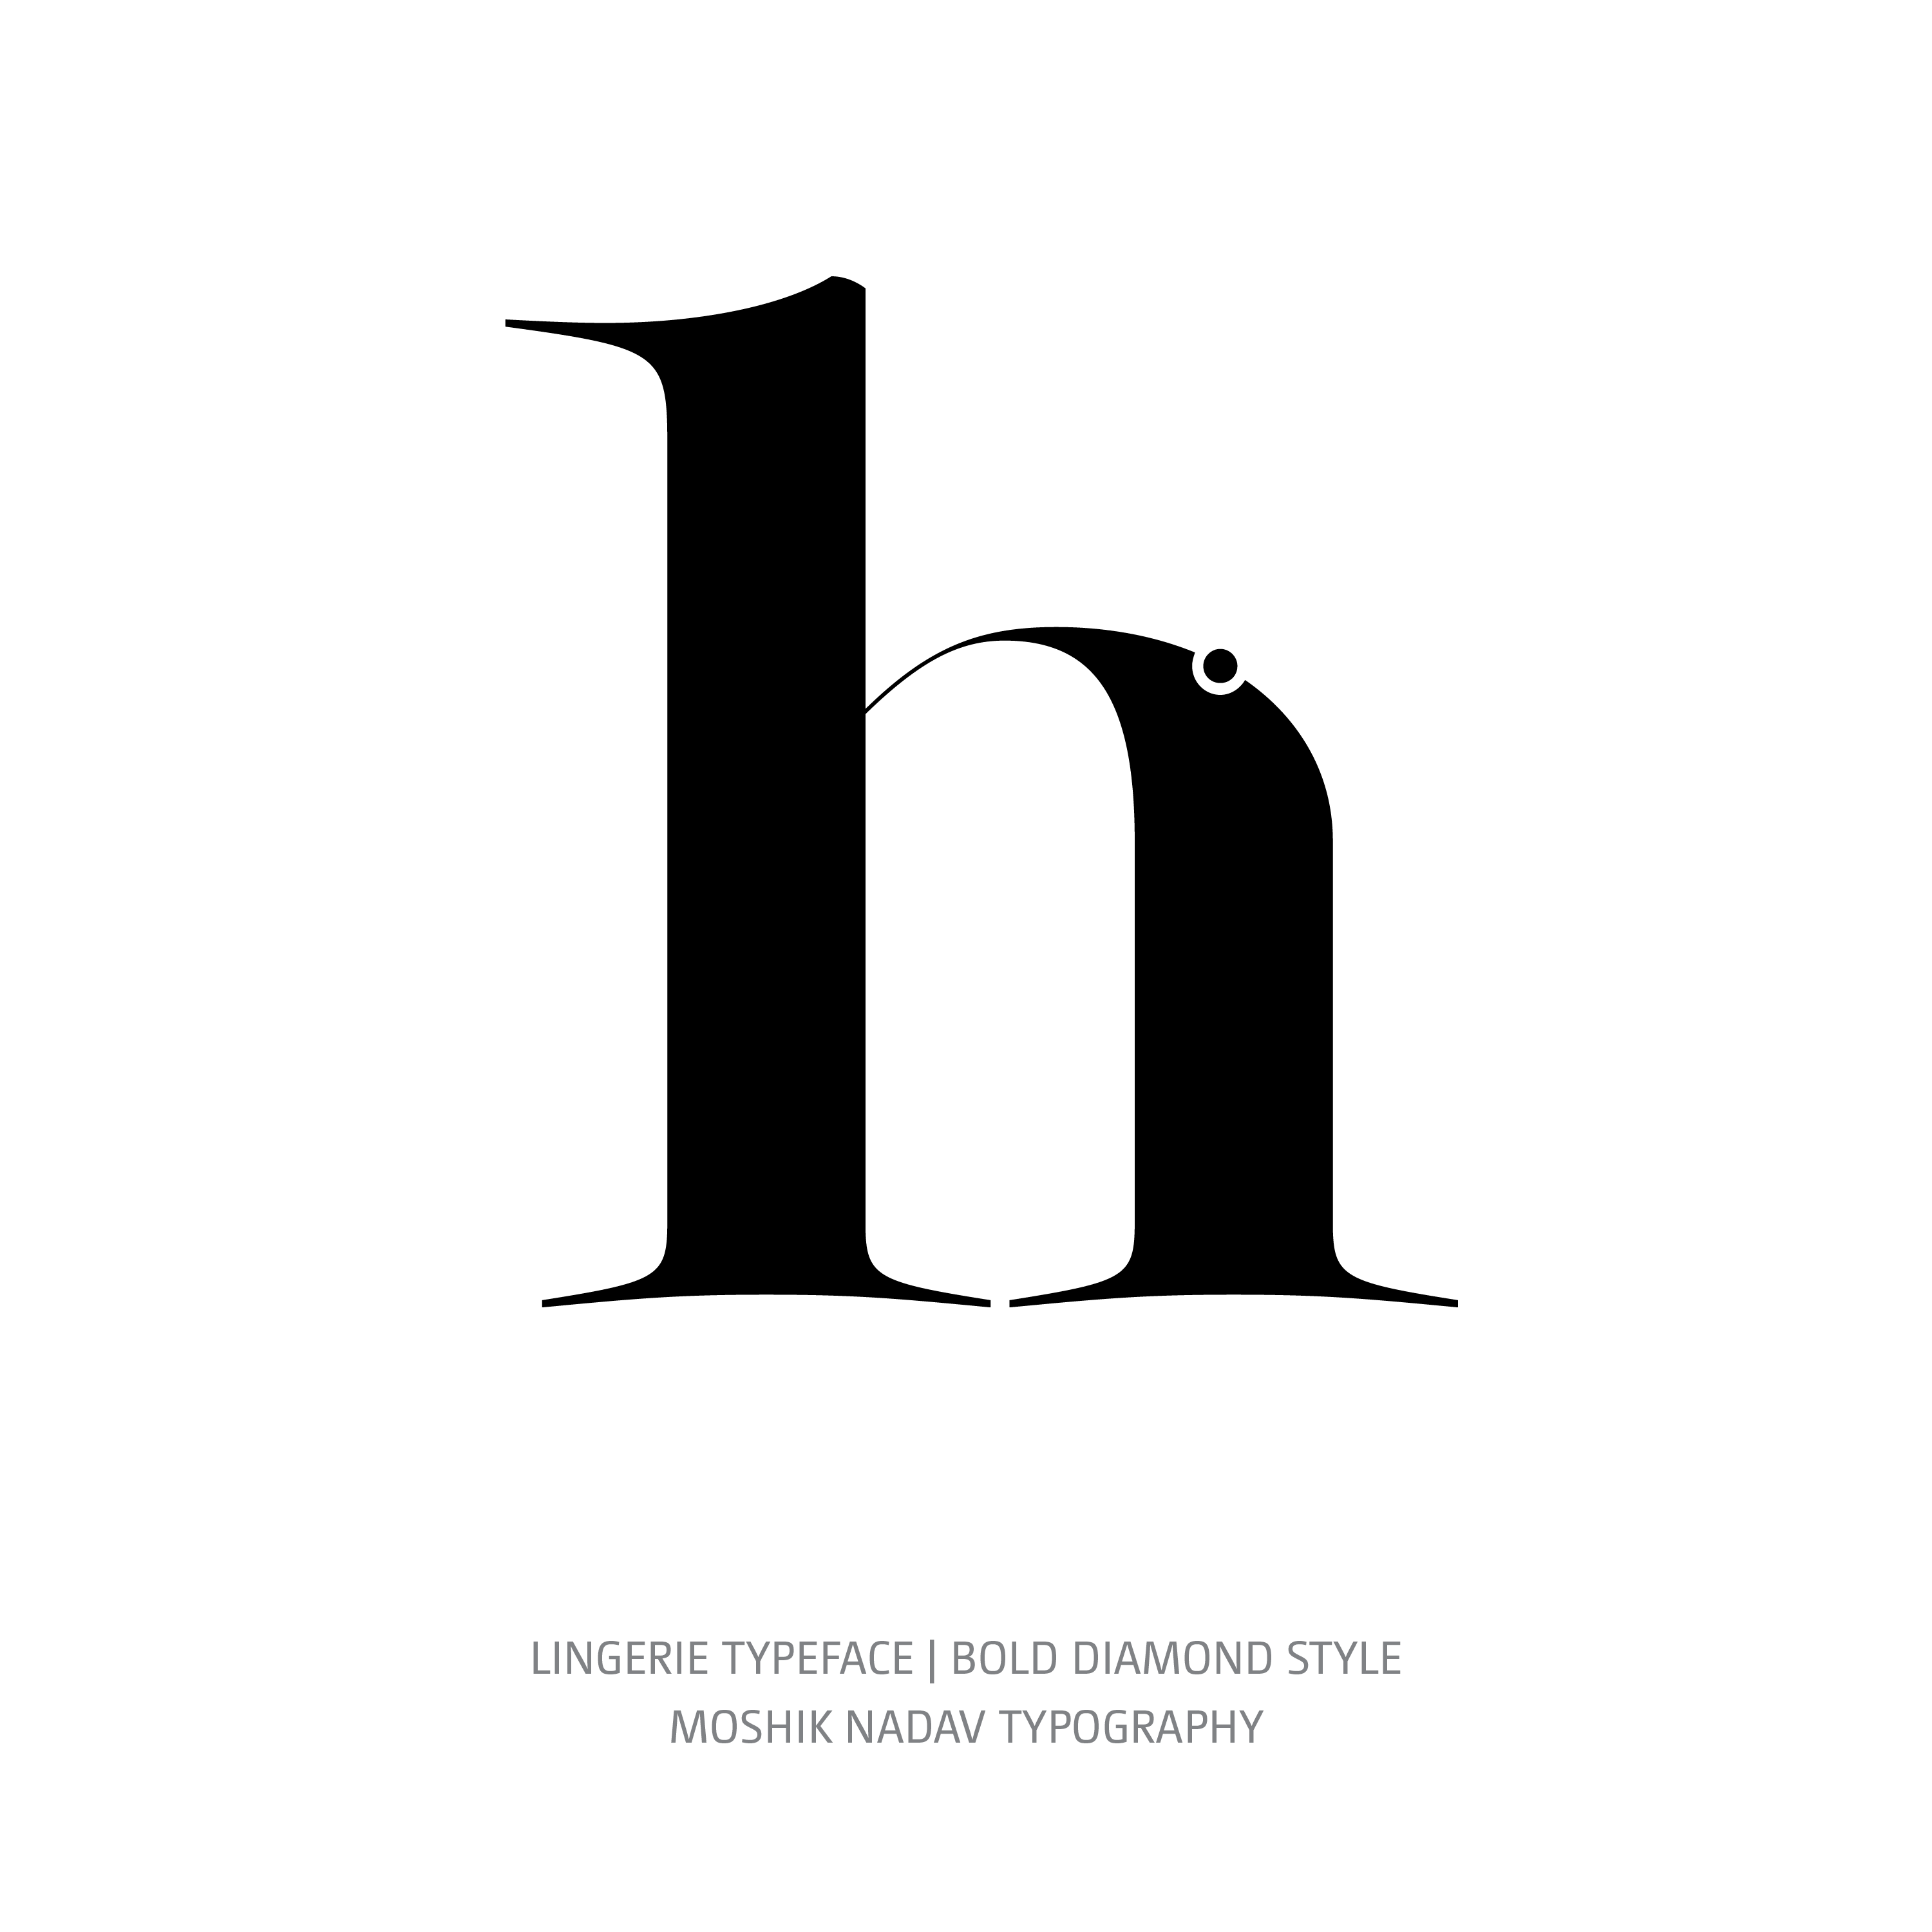 Lingerie Typeface Bold Diamond h